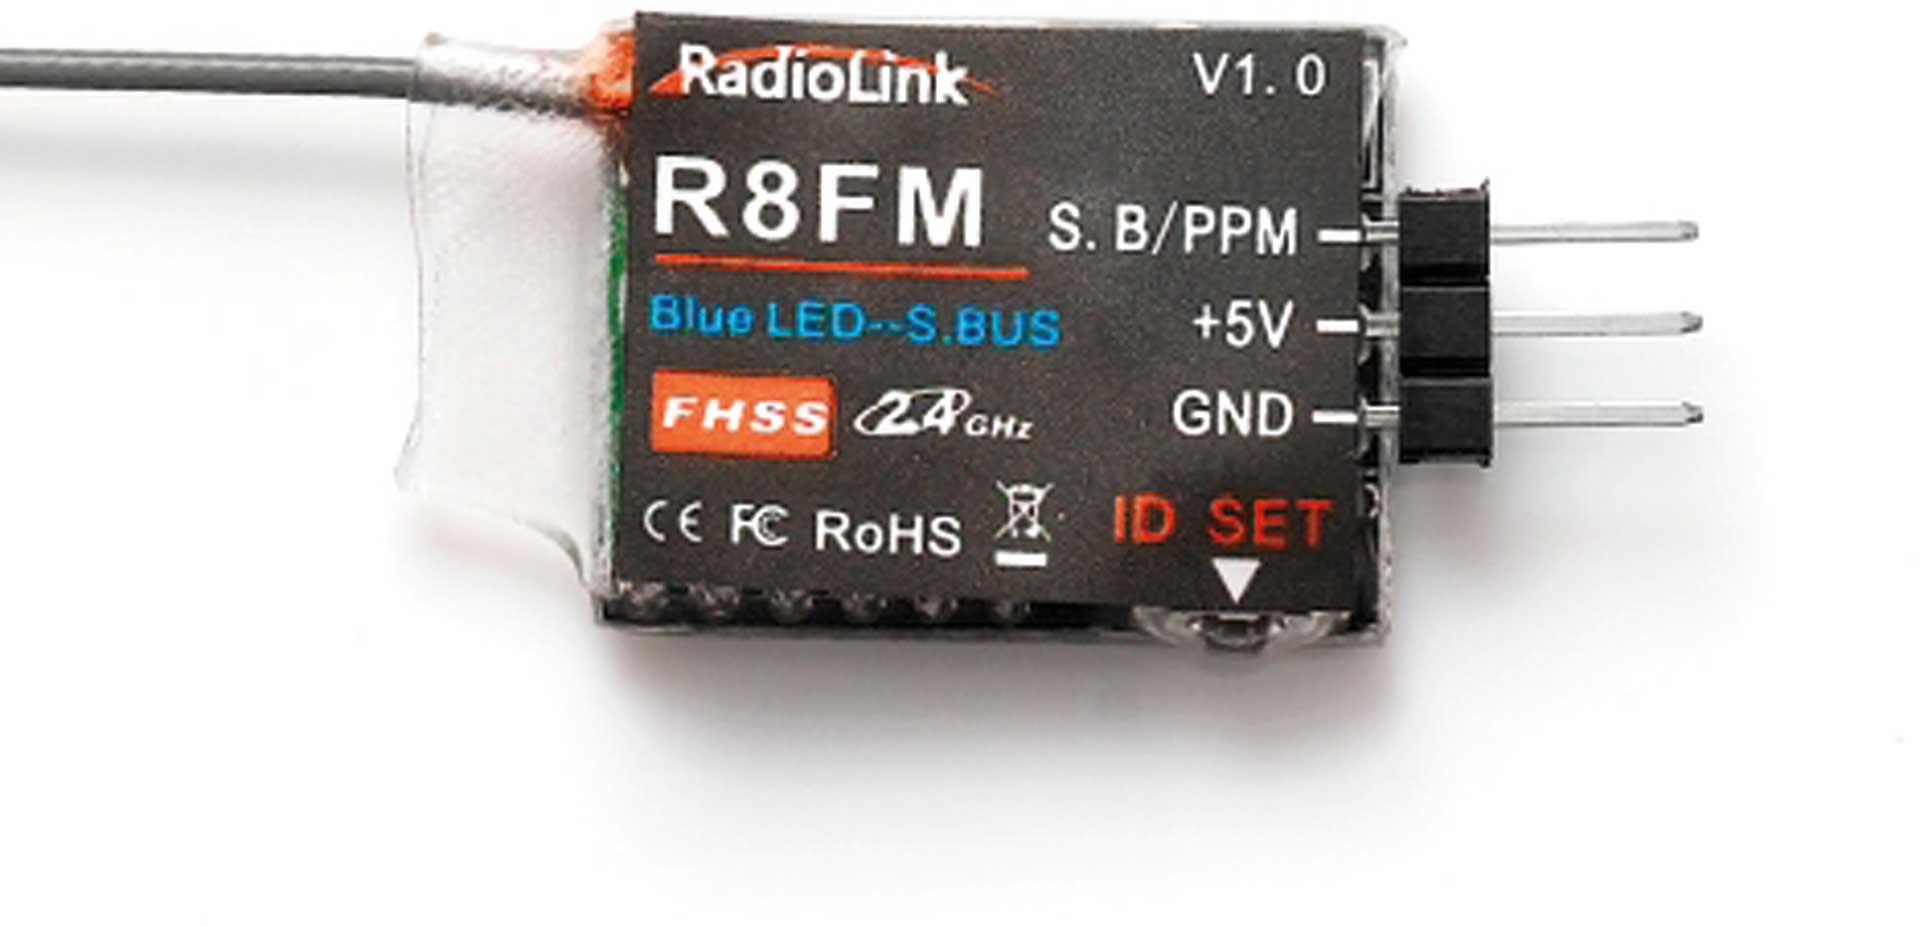 RadioLink Empfänger R8FM Mini 8-Kanal FHSS